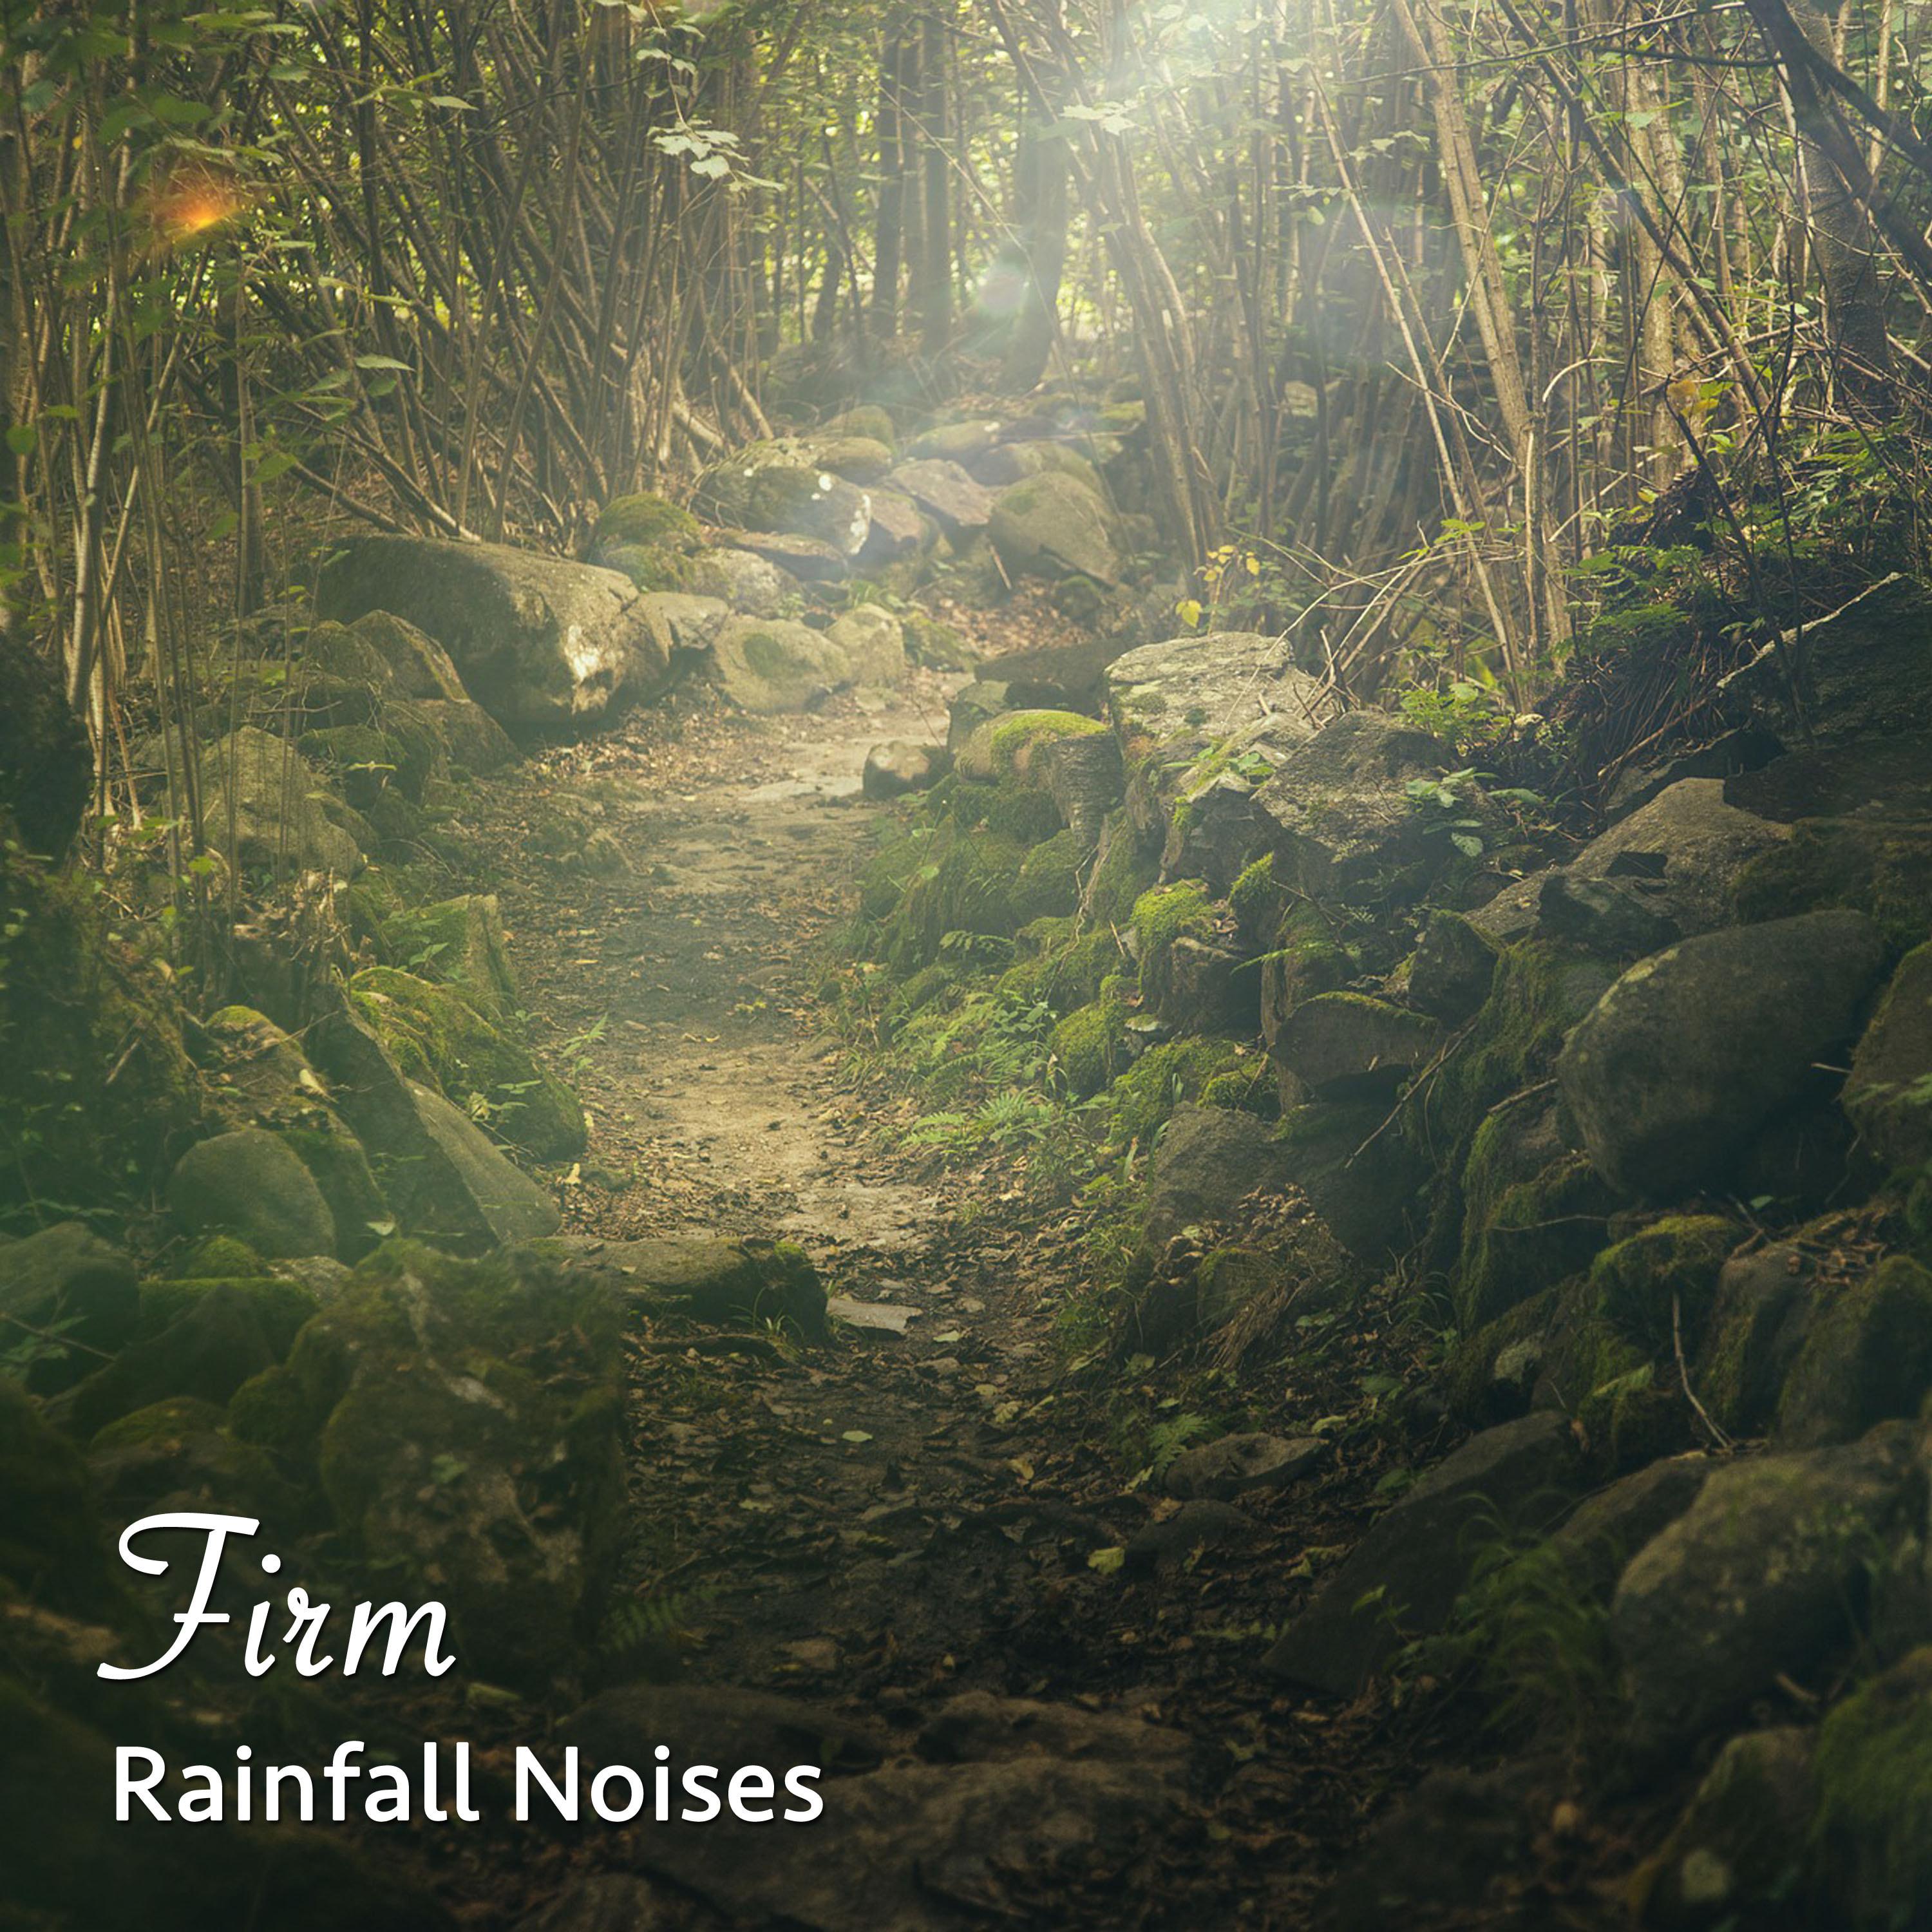 #15 Firm Rainfall Noises